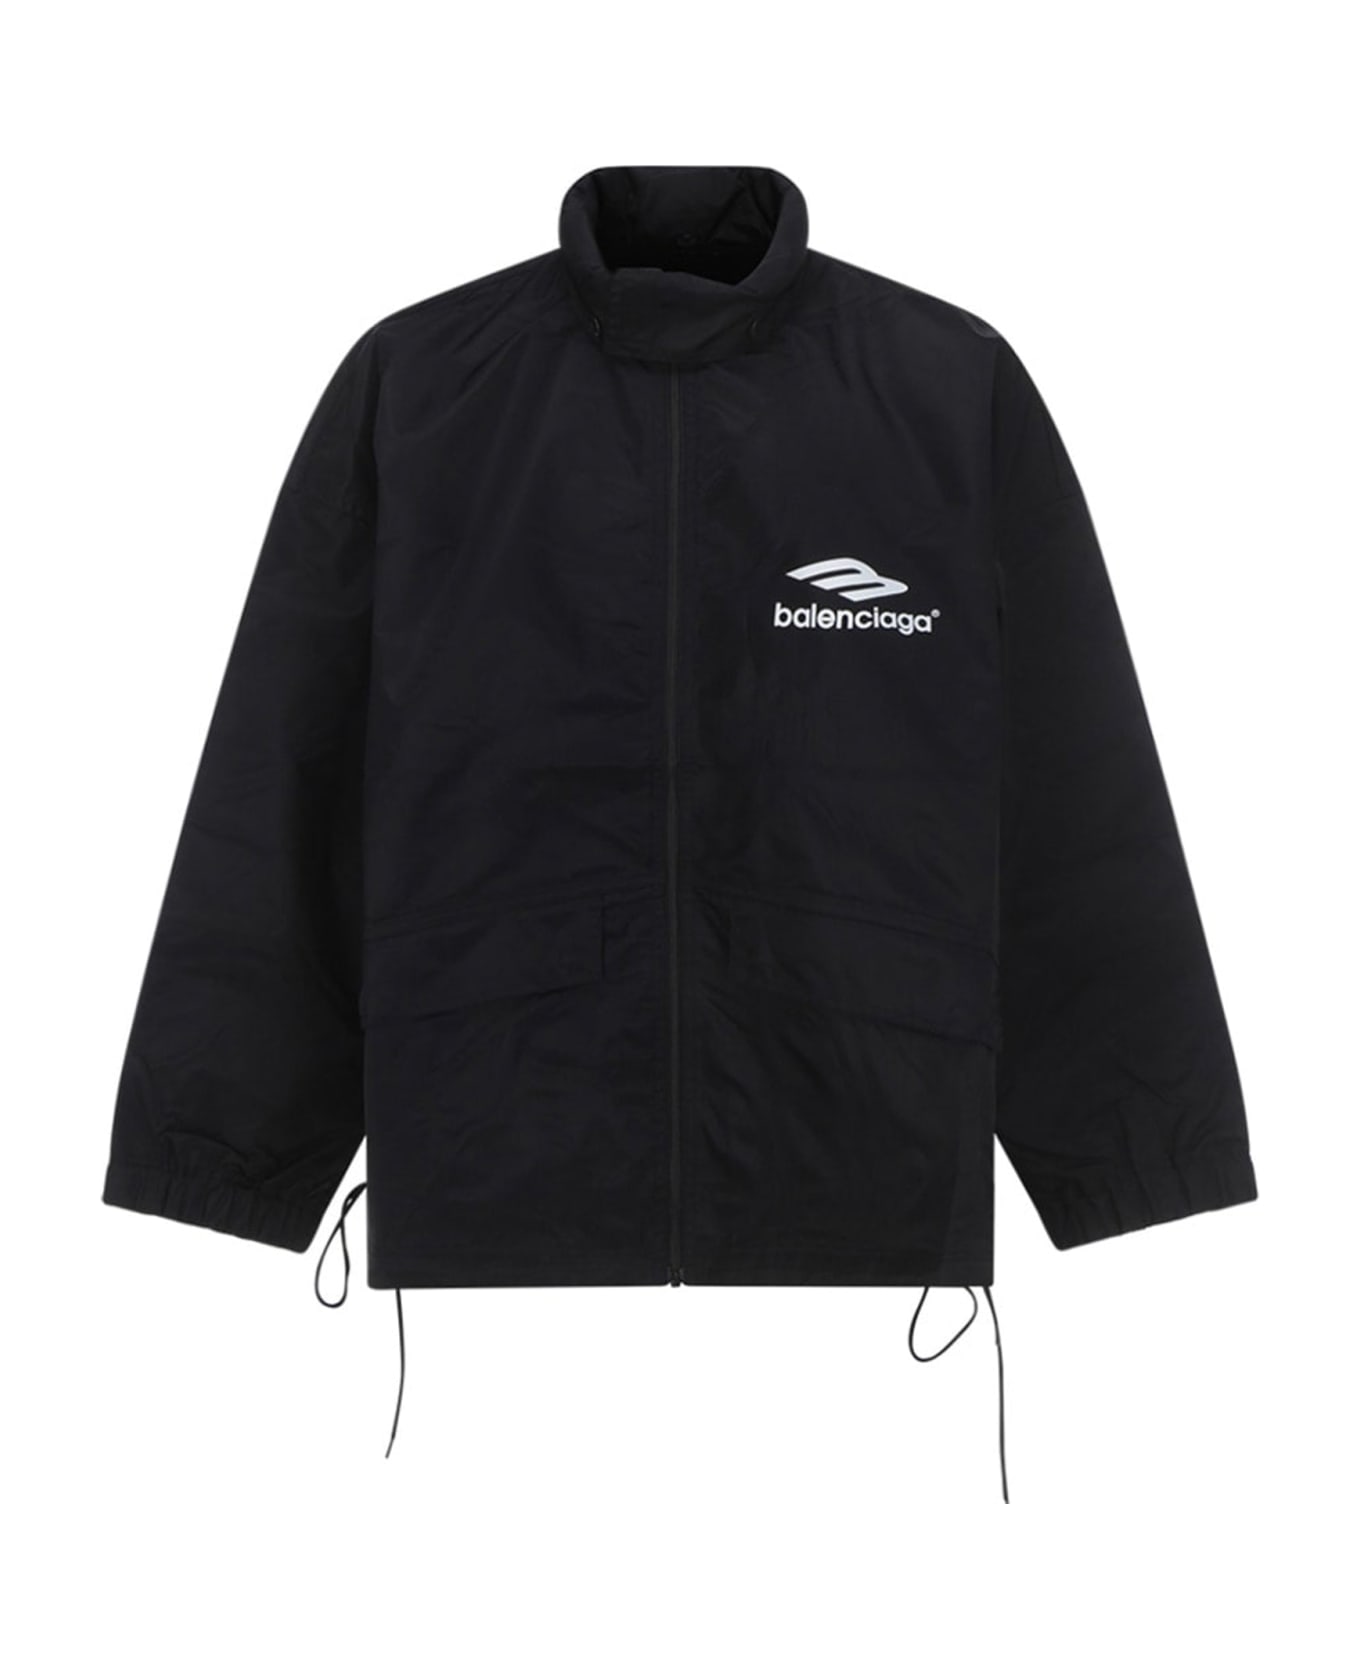 Balenciaga Windbreaker Jacket - Black ジャケット